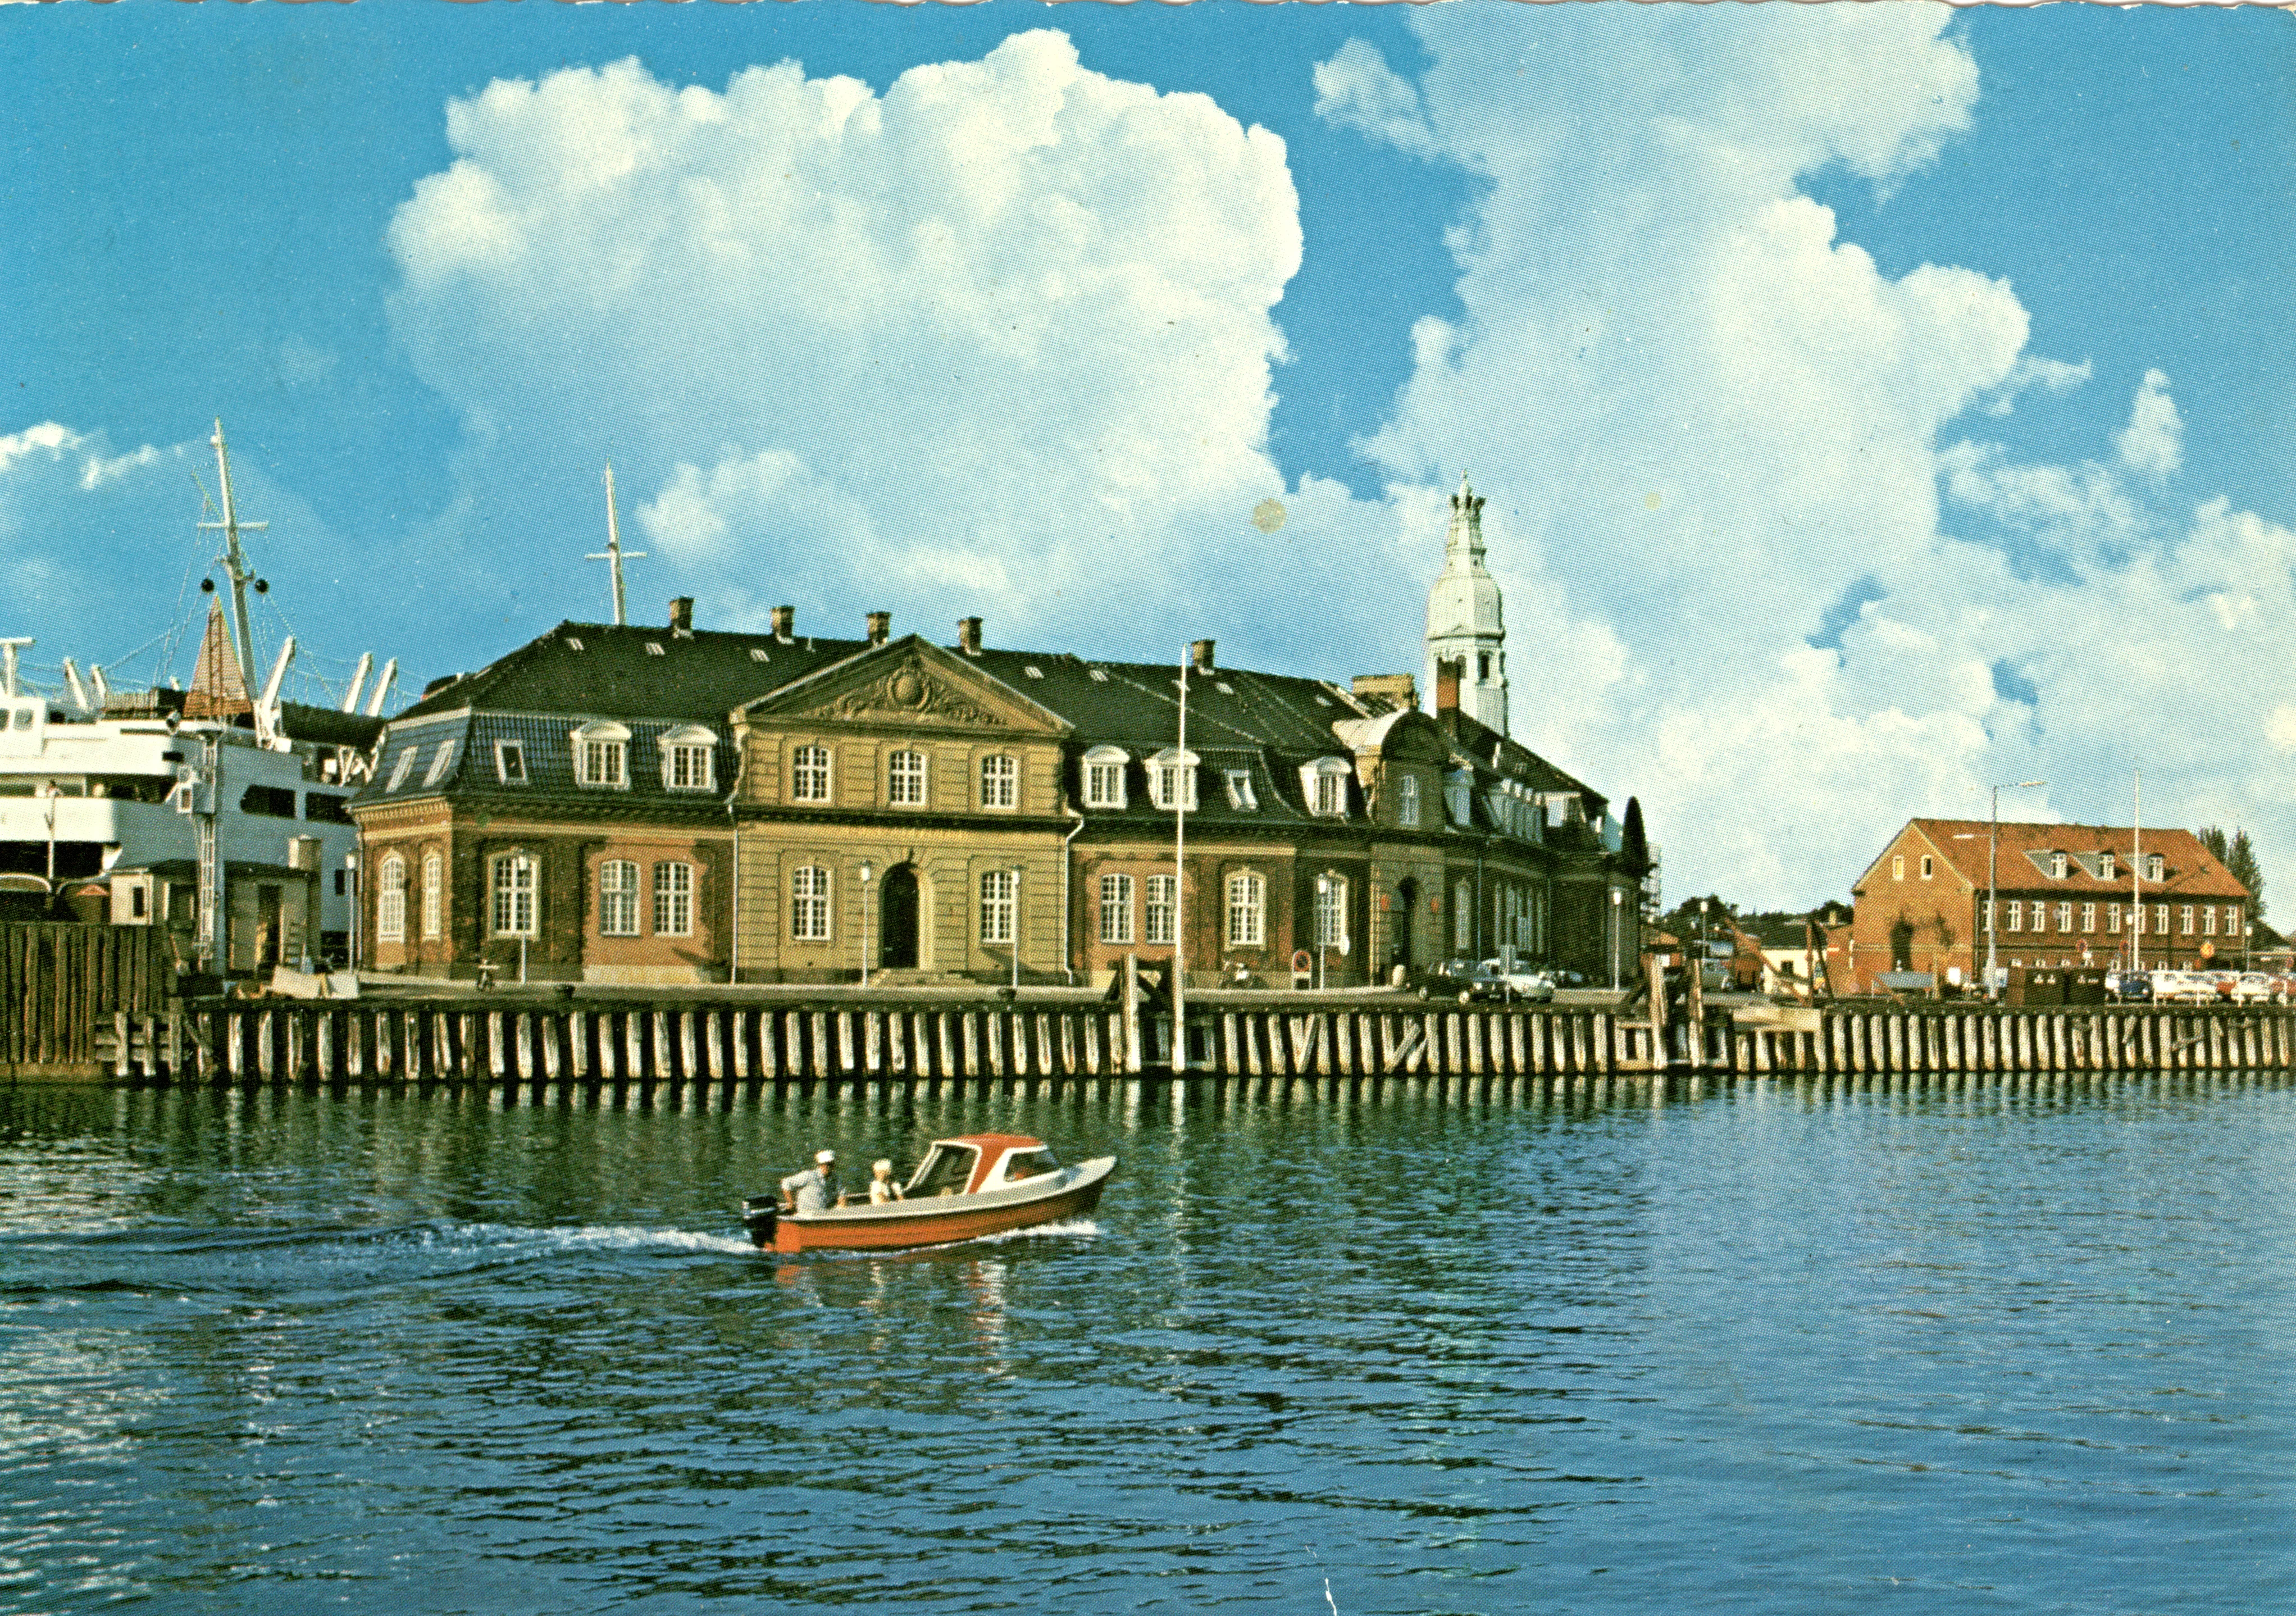 Postkort med Korsør Station.